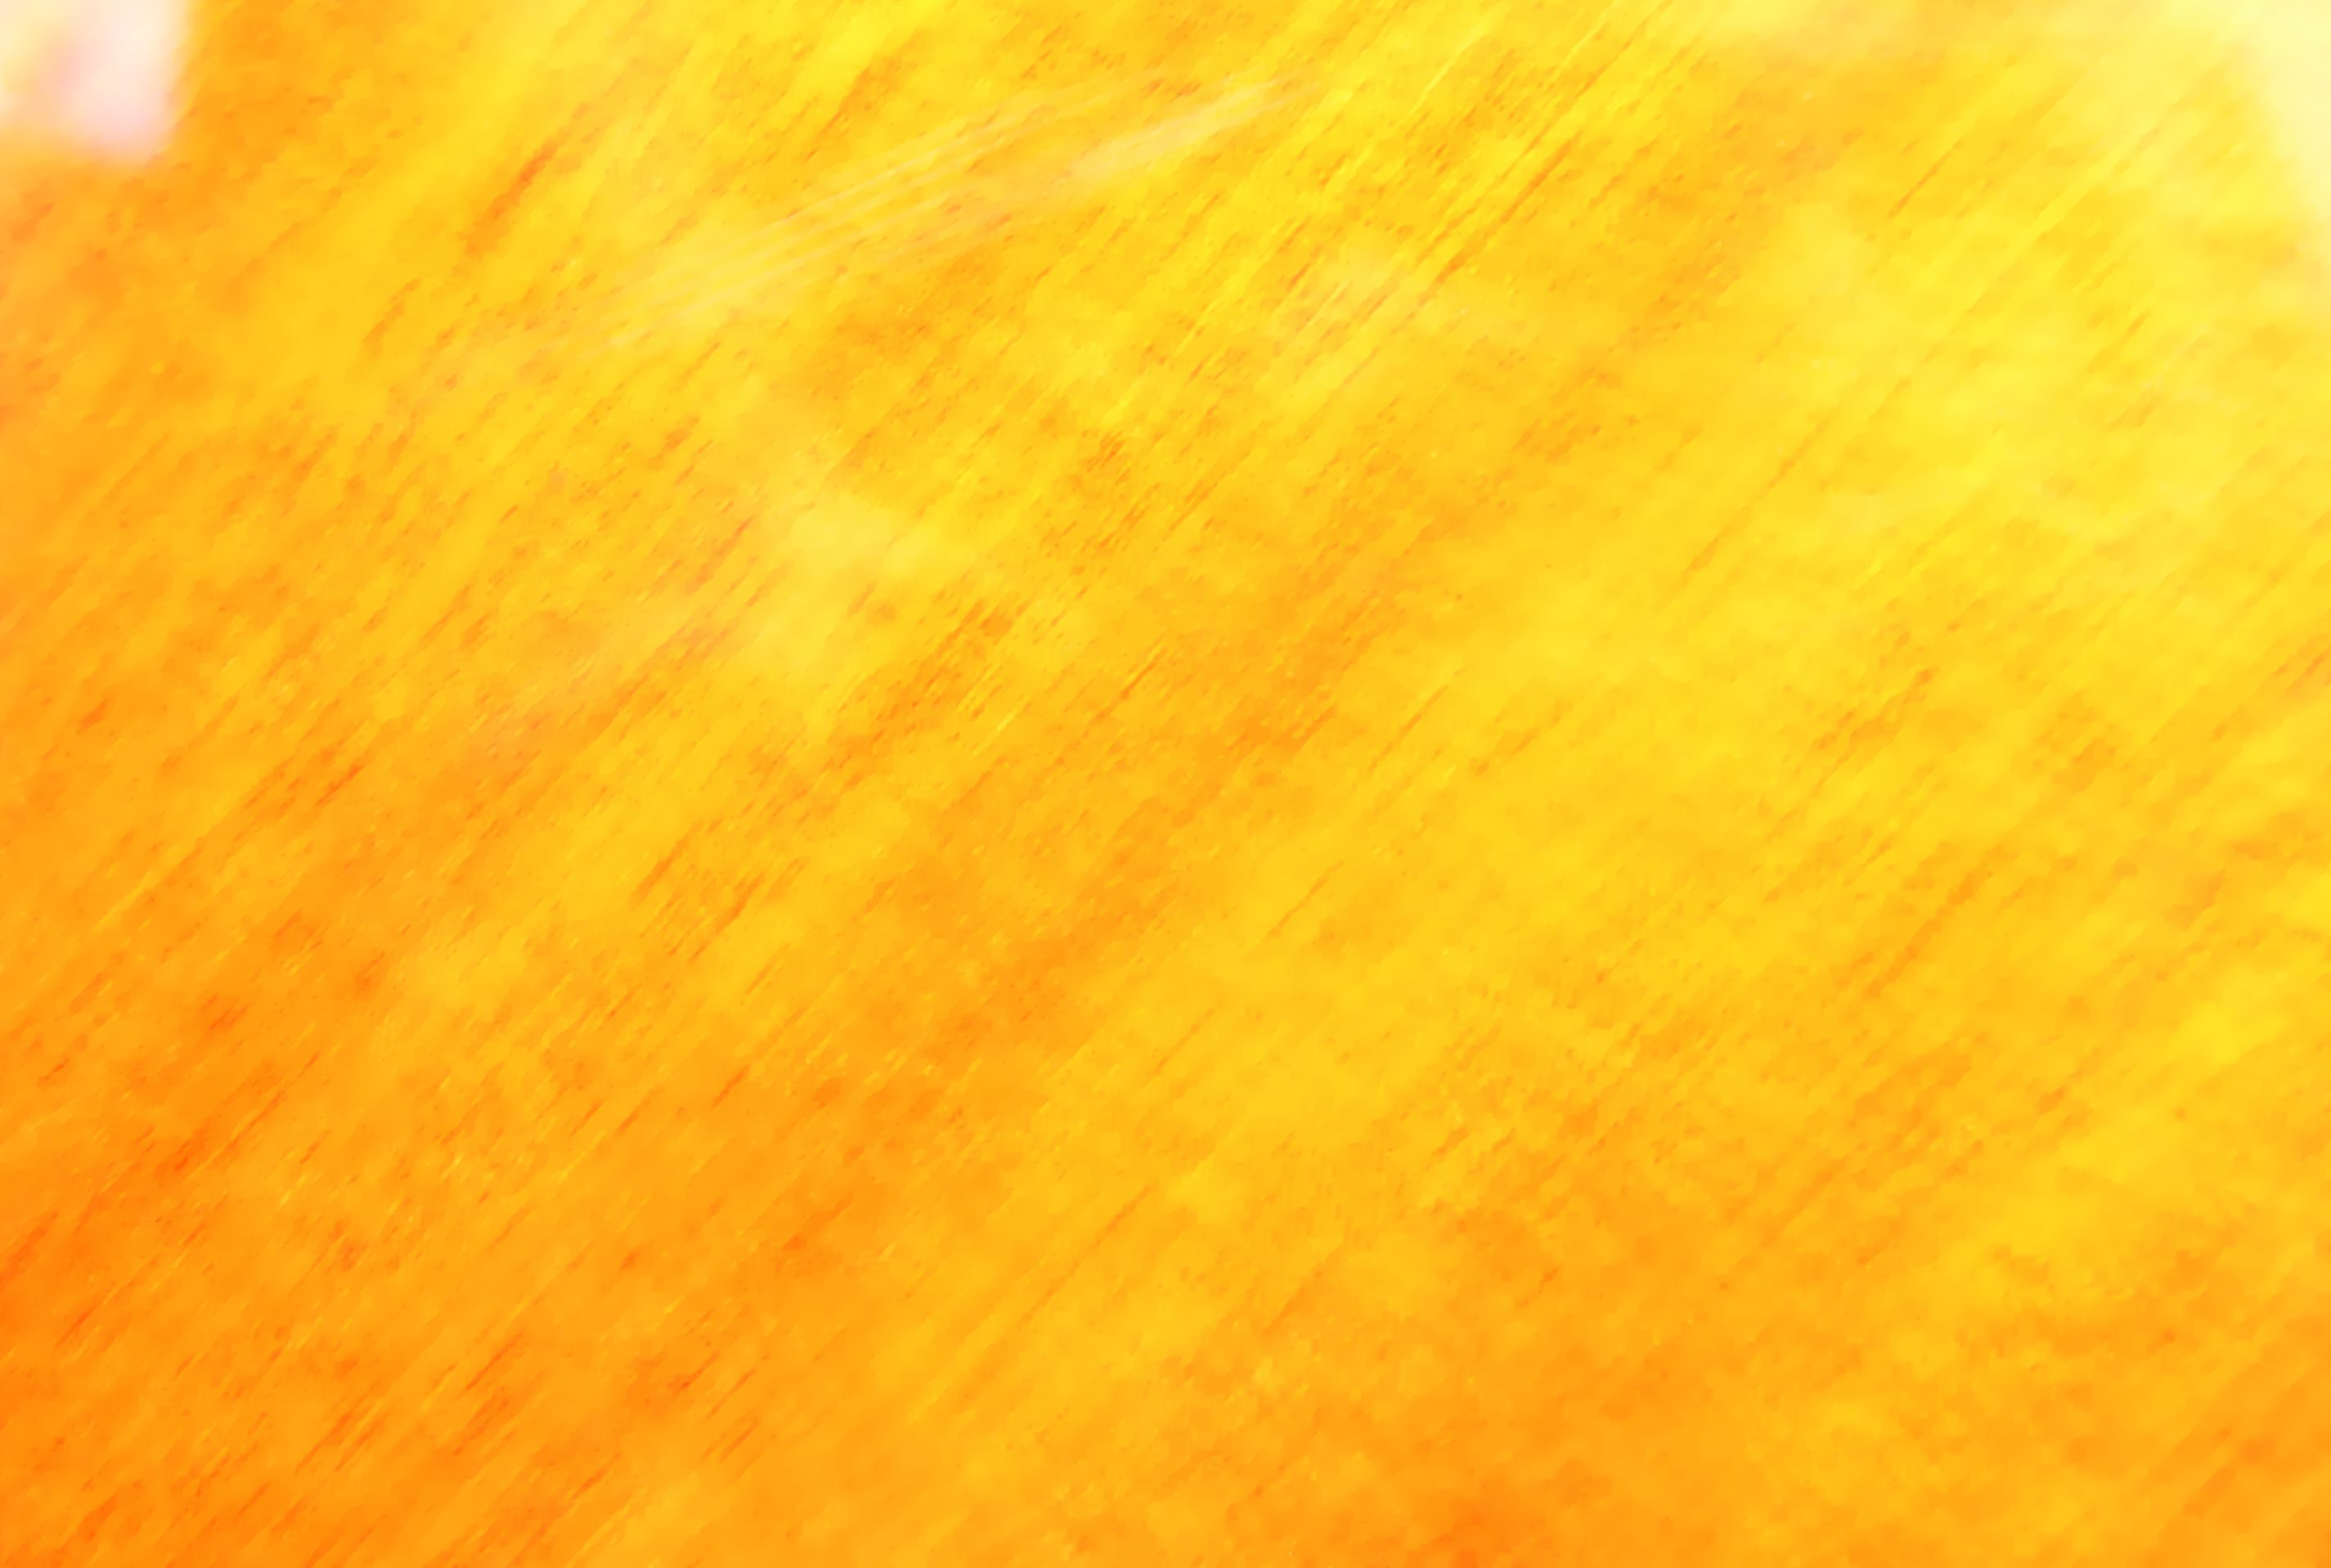 Solid Orange Backgrounds HD wallpaper background